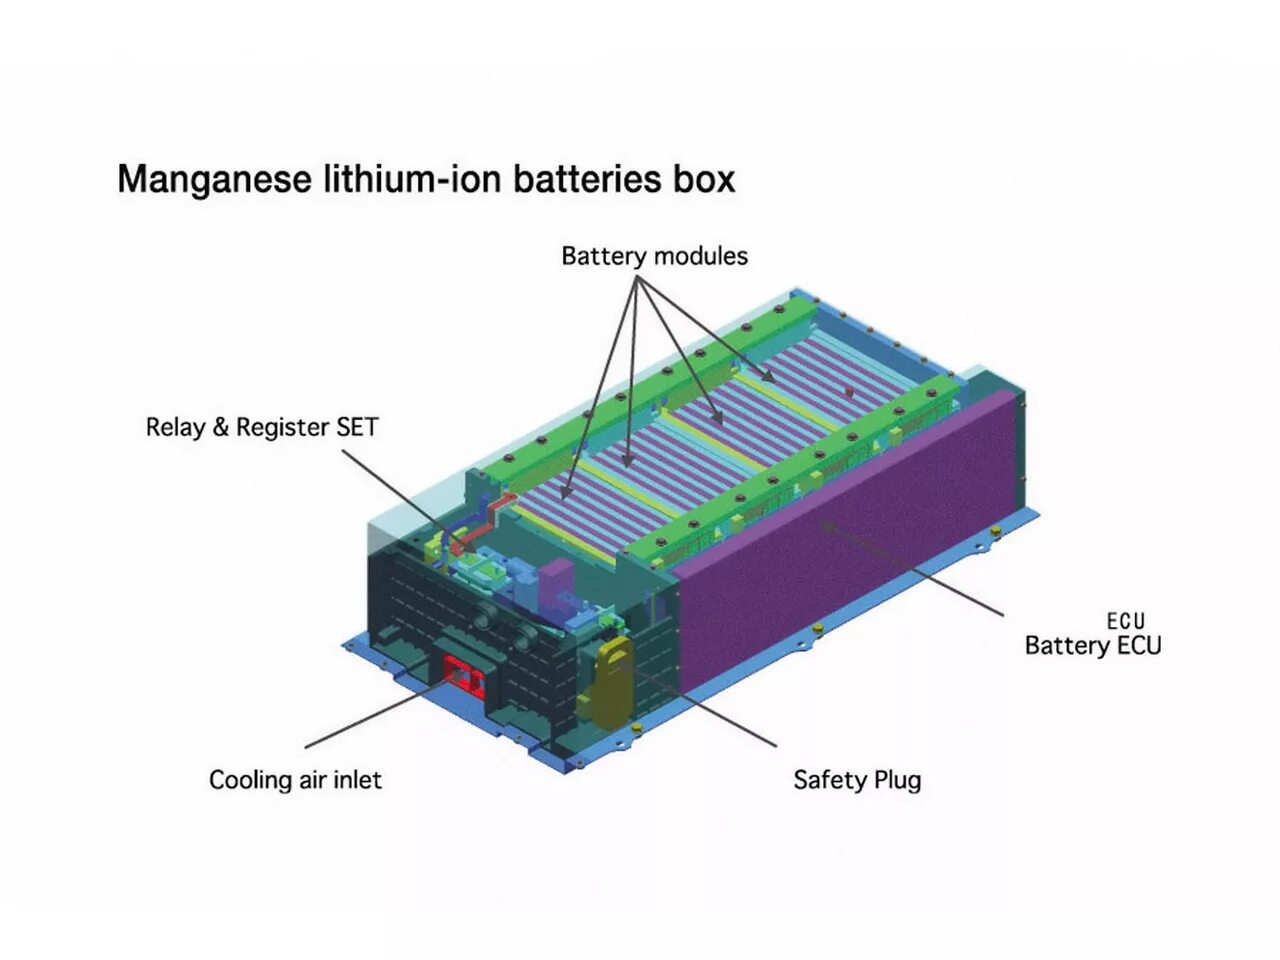 Electric car Lithium ion Batteries. Battery Pack System литий-ионный АКБ. Lithium Battery Box для конструктора. Li-ion Polymer Battery Box.